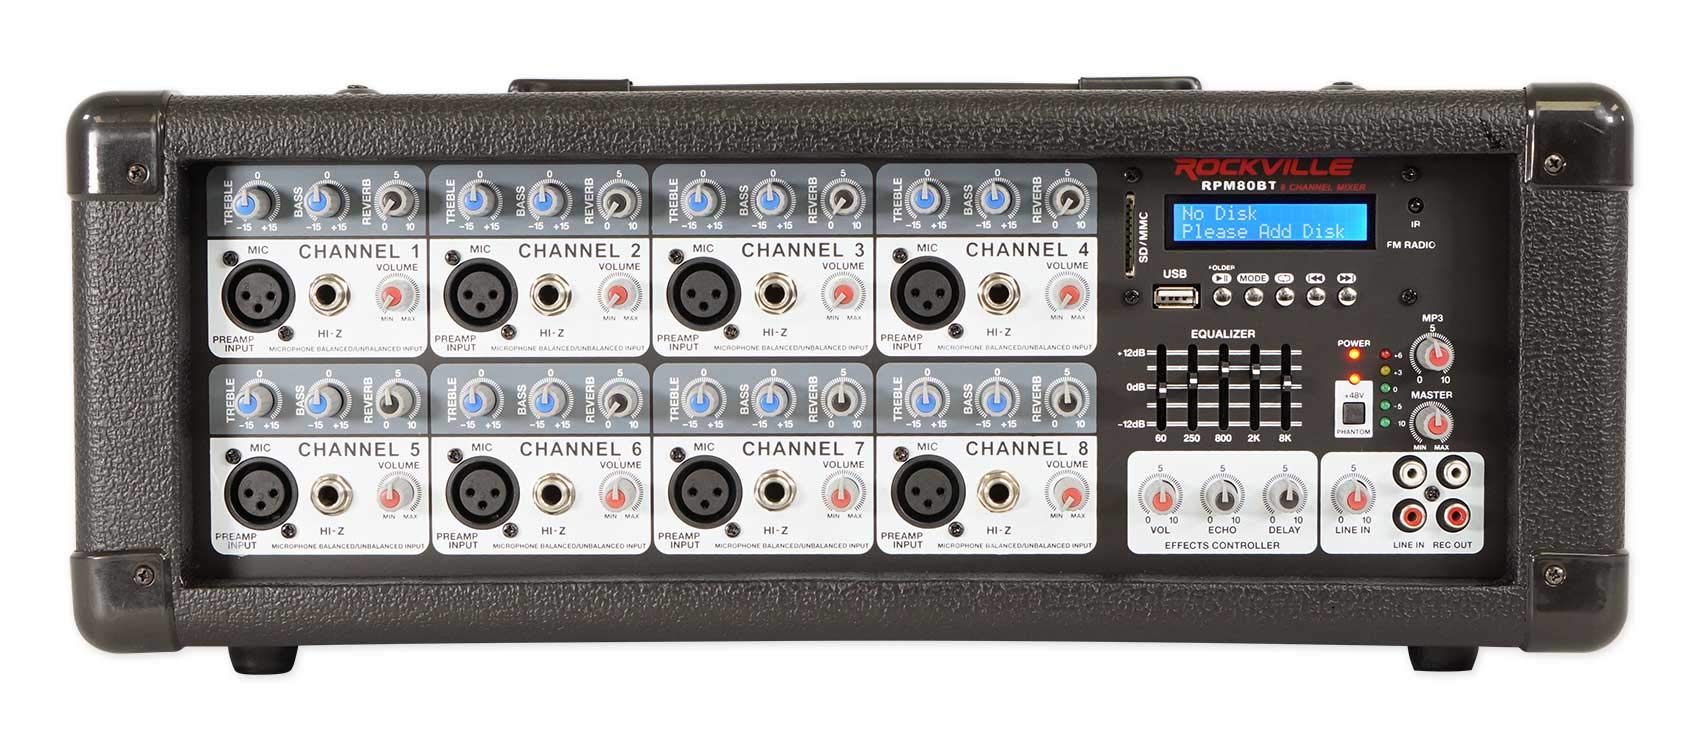 Rockville RPM80BT 2400 W angetriebener 8-Kanal-Mixer/Verstärker mit Bluetooth/EQ/Effekten